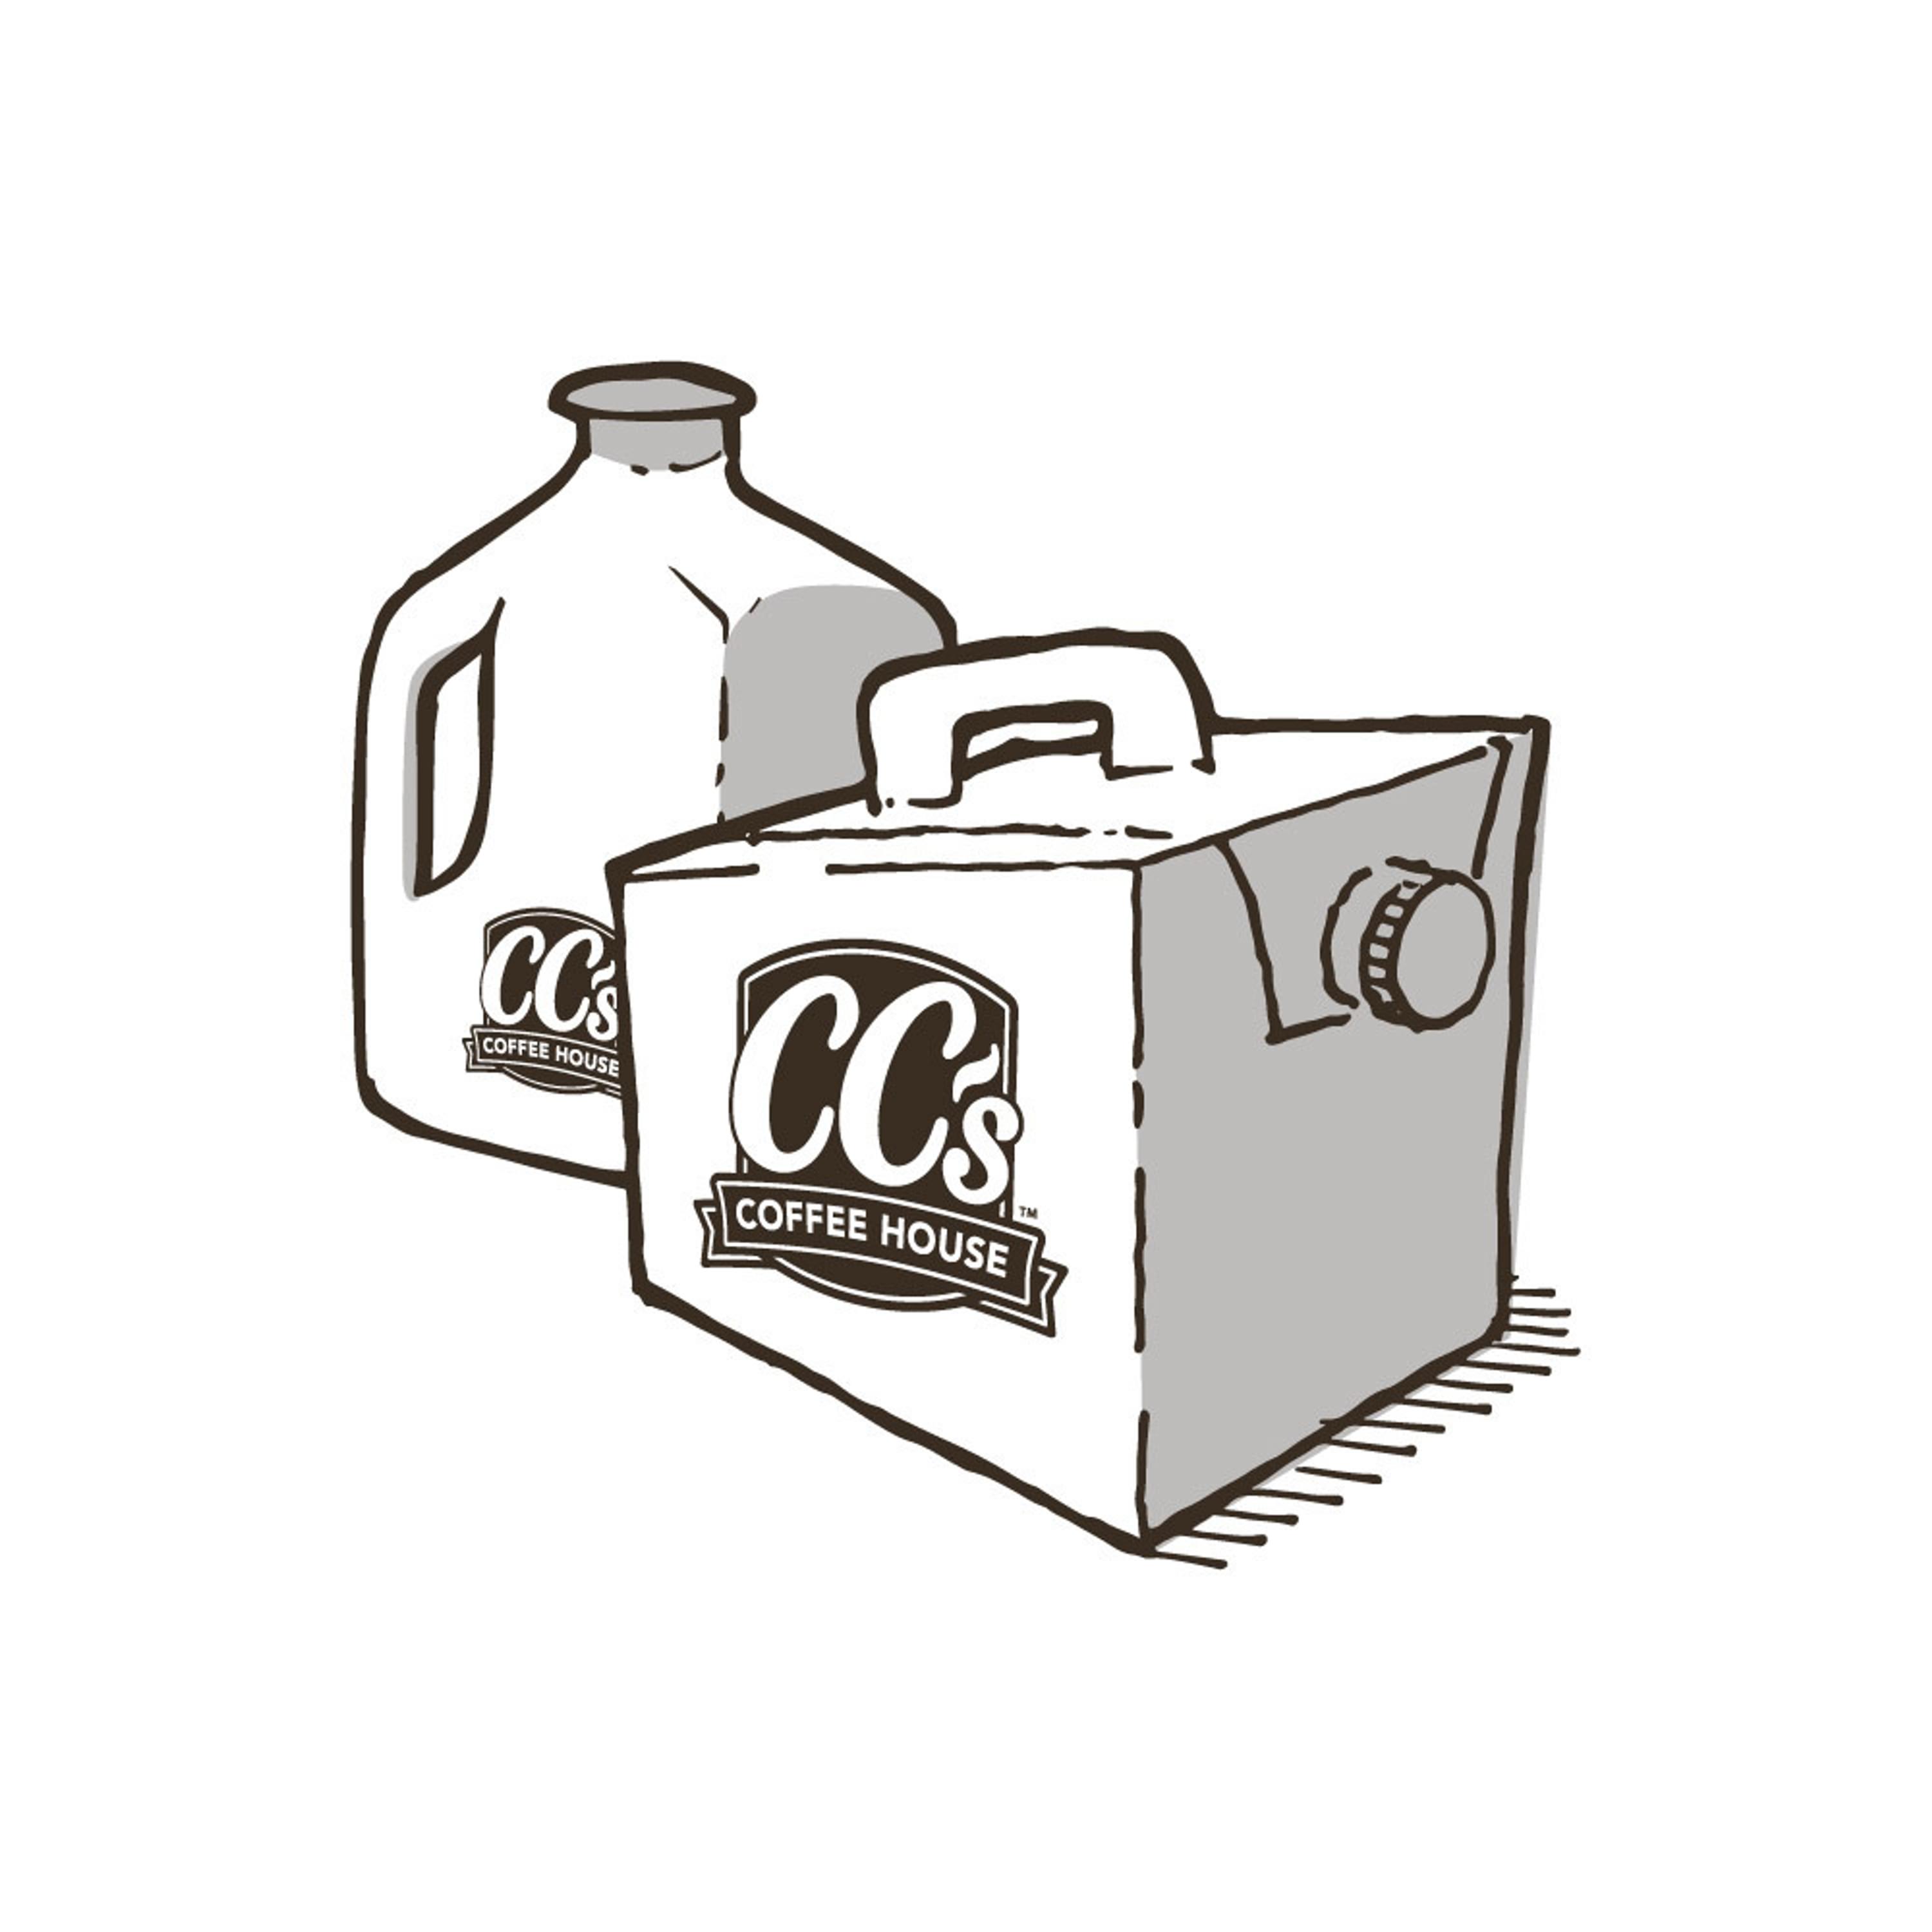 A gallon jug and a carton beverage dispenser